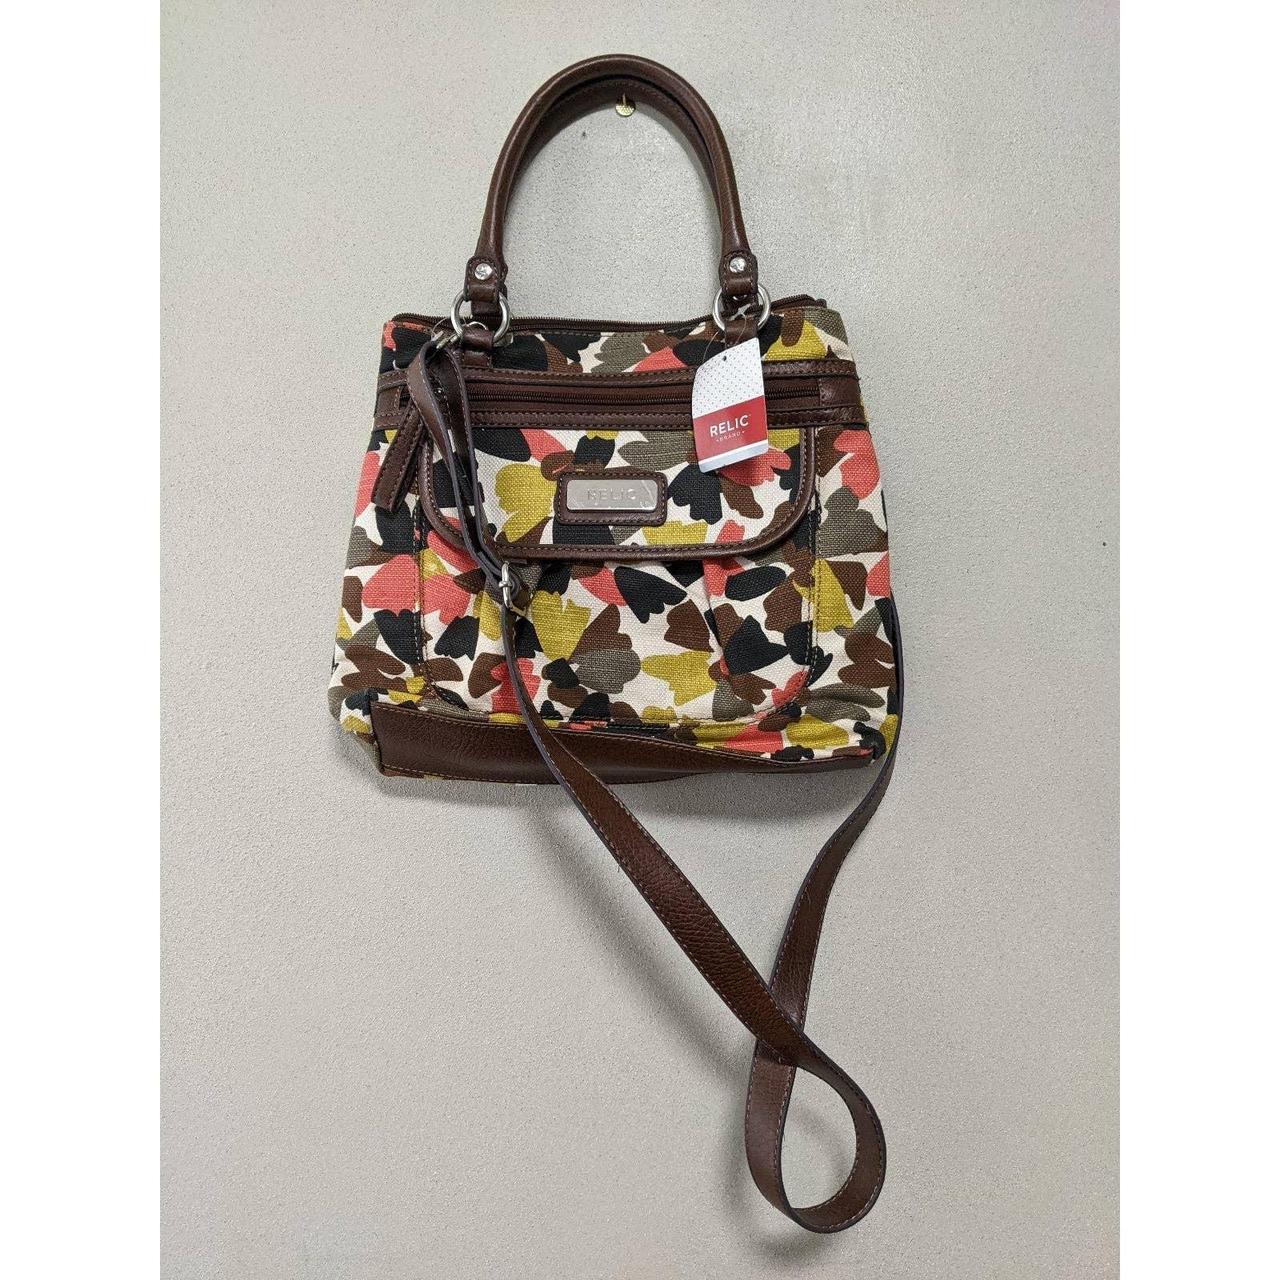 Buy Hidesign Flower 01 Medium Casual Black Womens Office Handbag (M) online